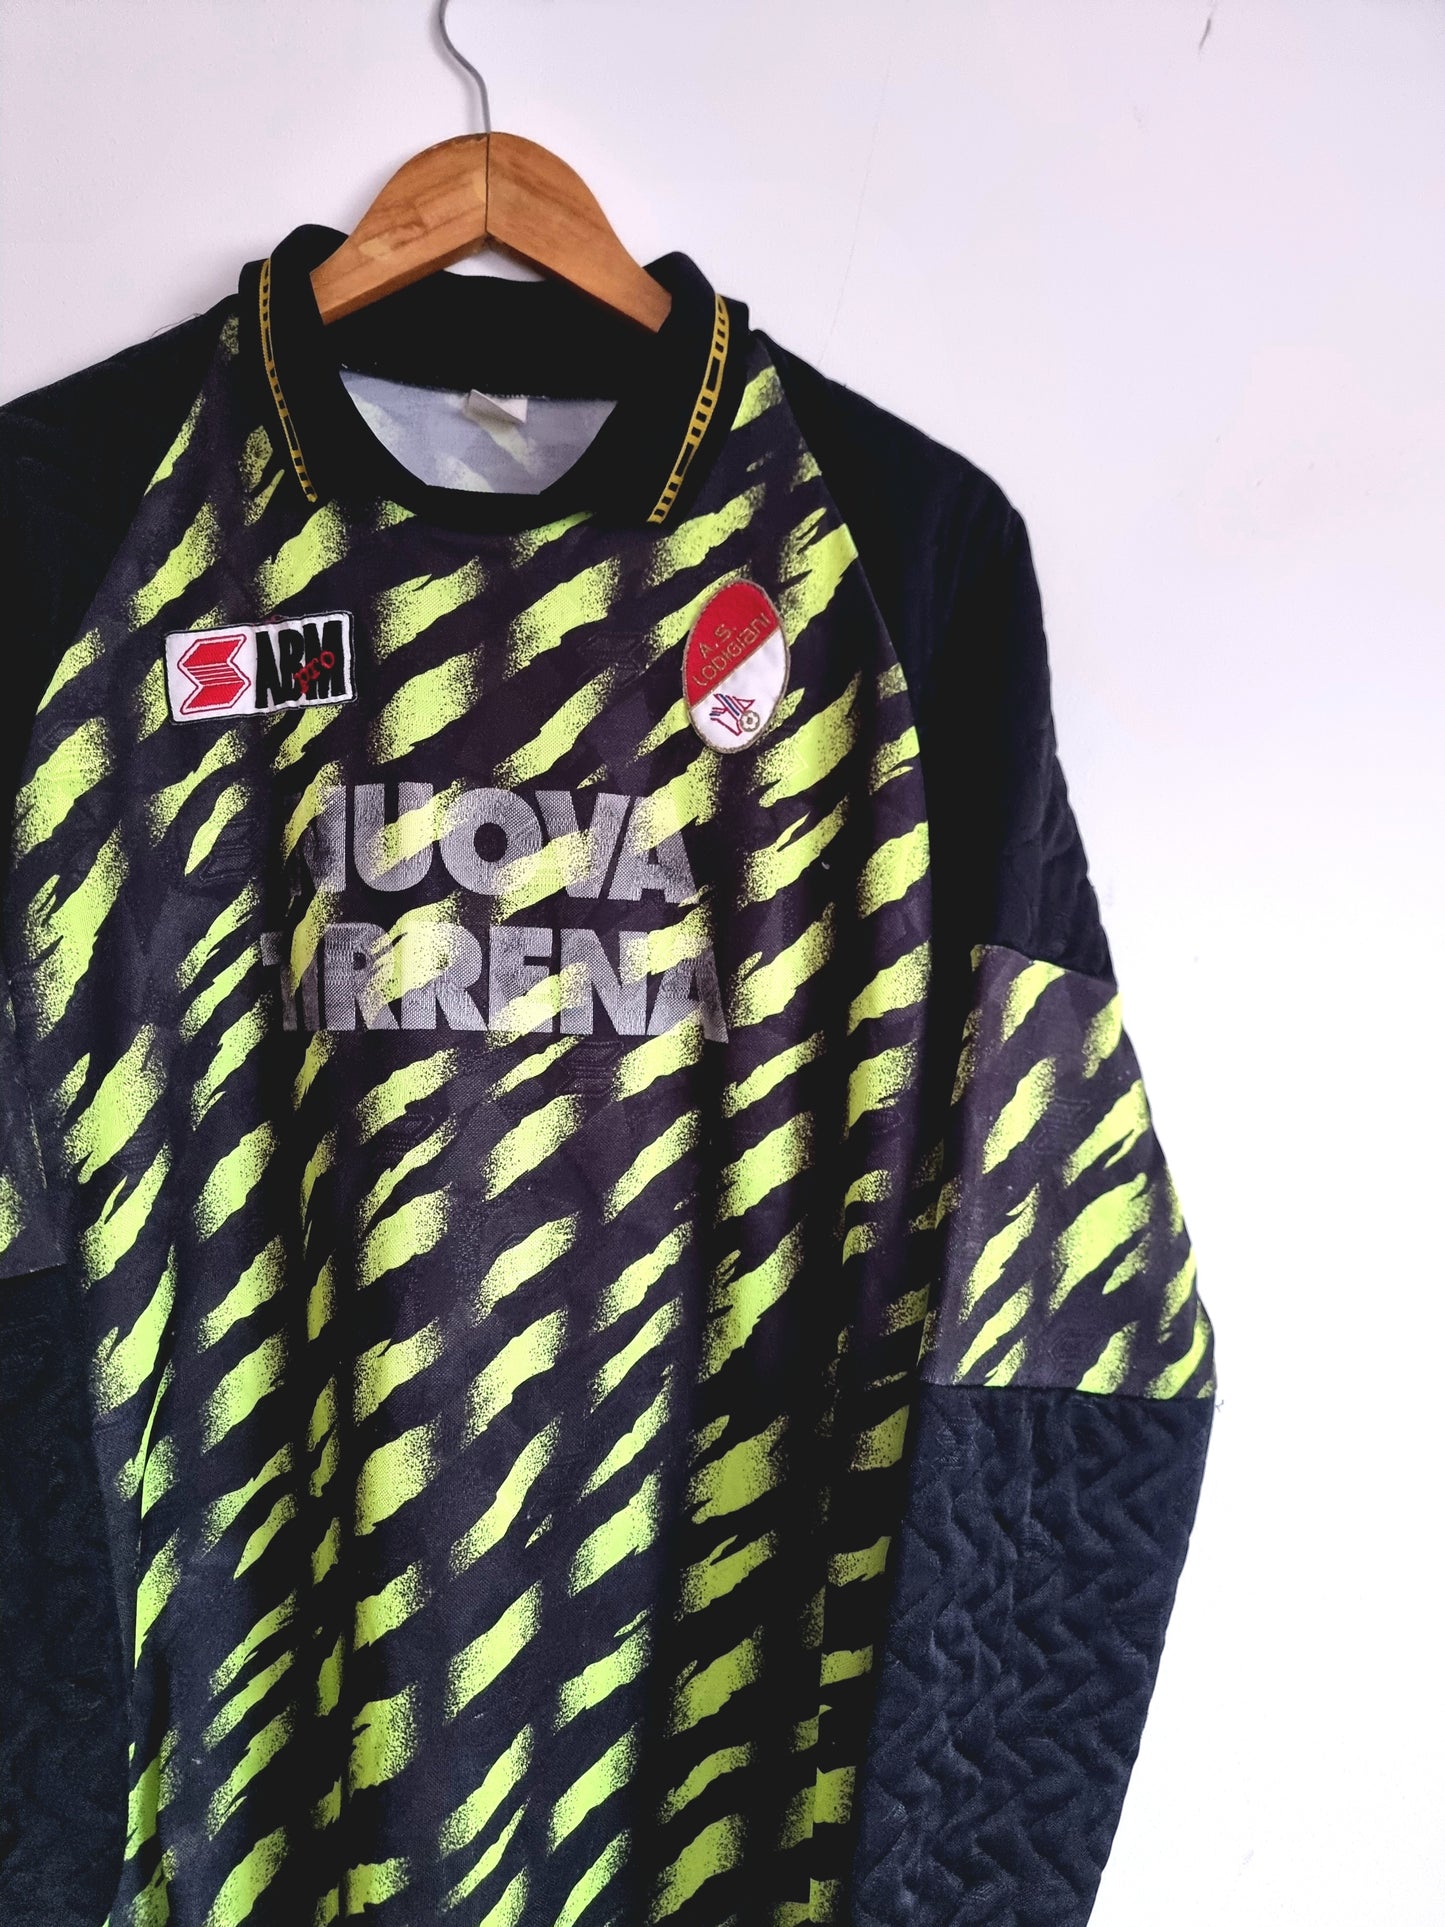 ABM Lodigiani 93/94 Long Sleeve Goalkeeper Shirt XL